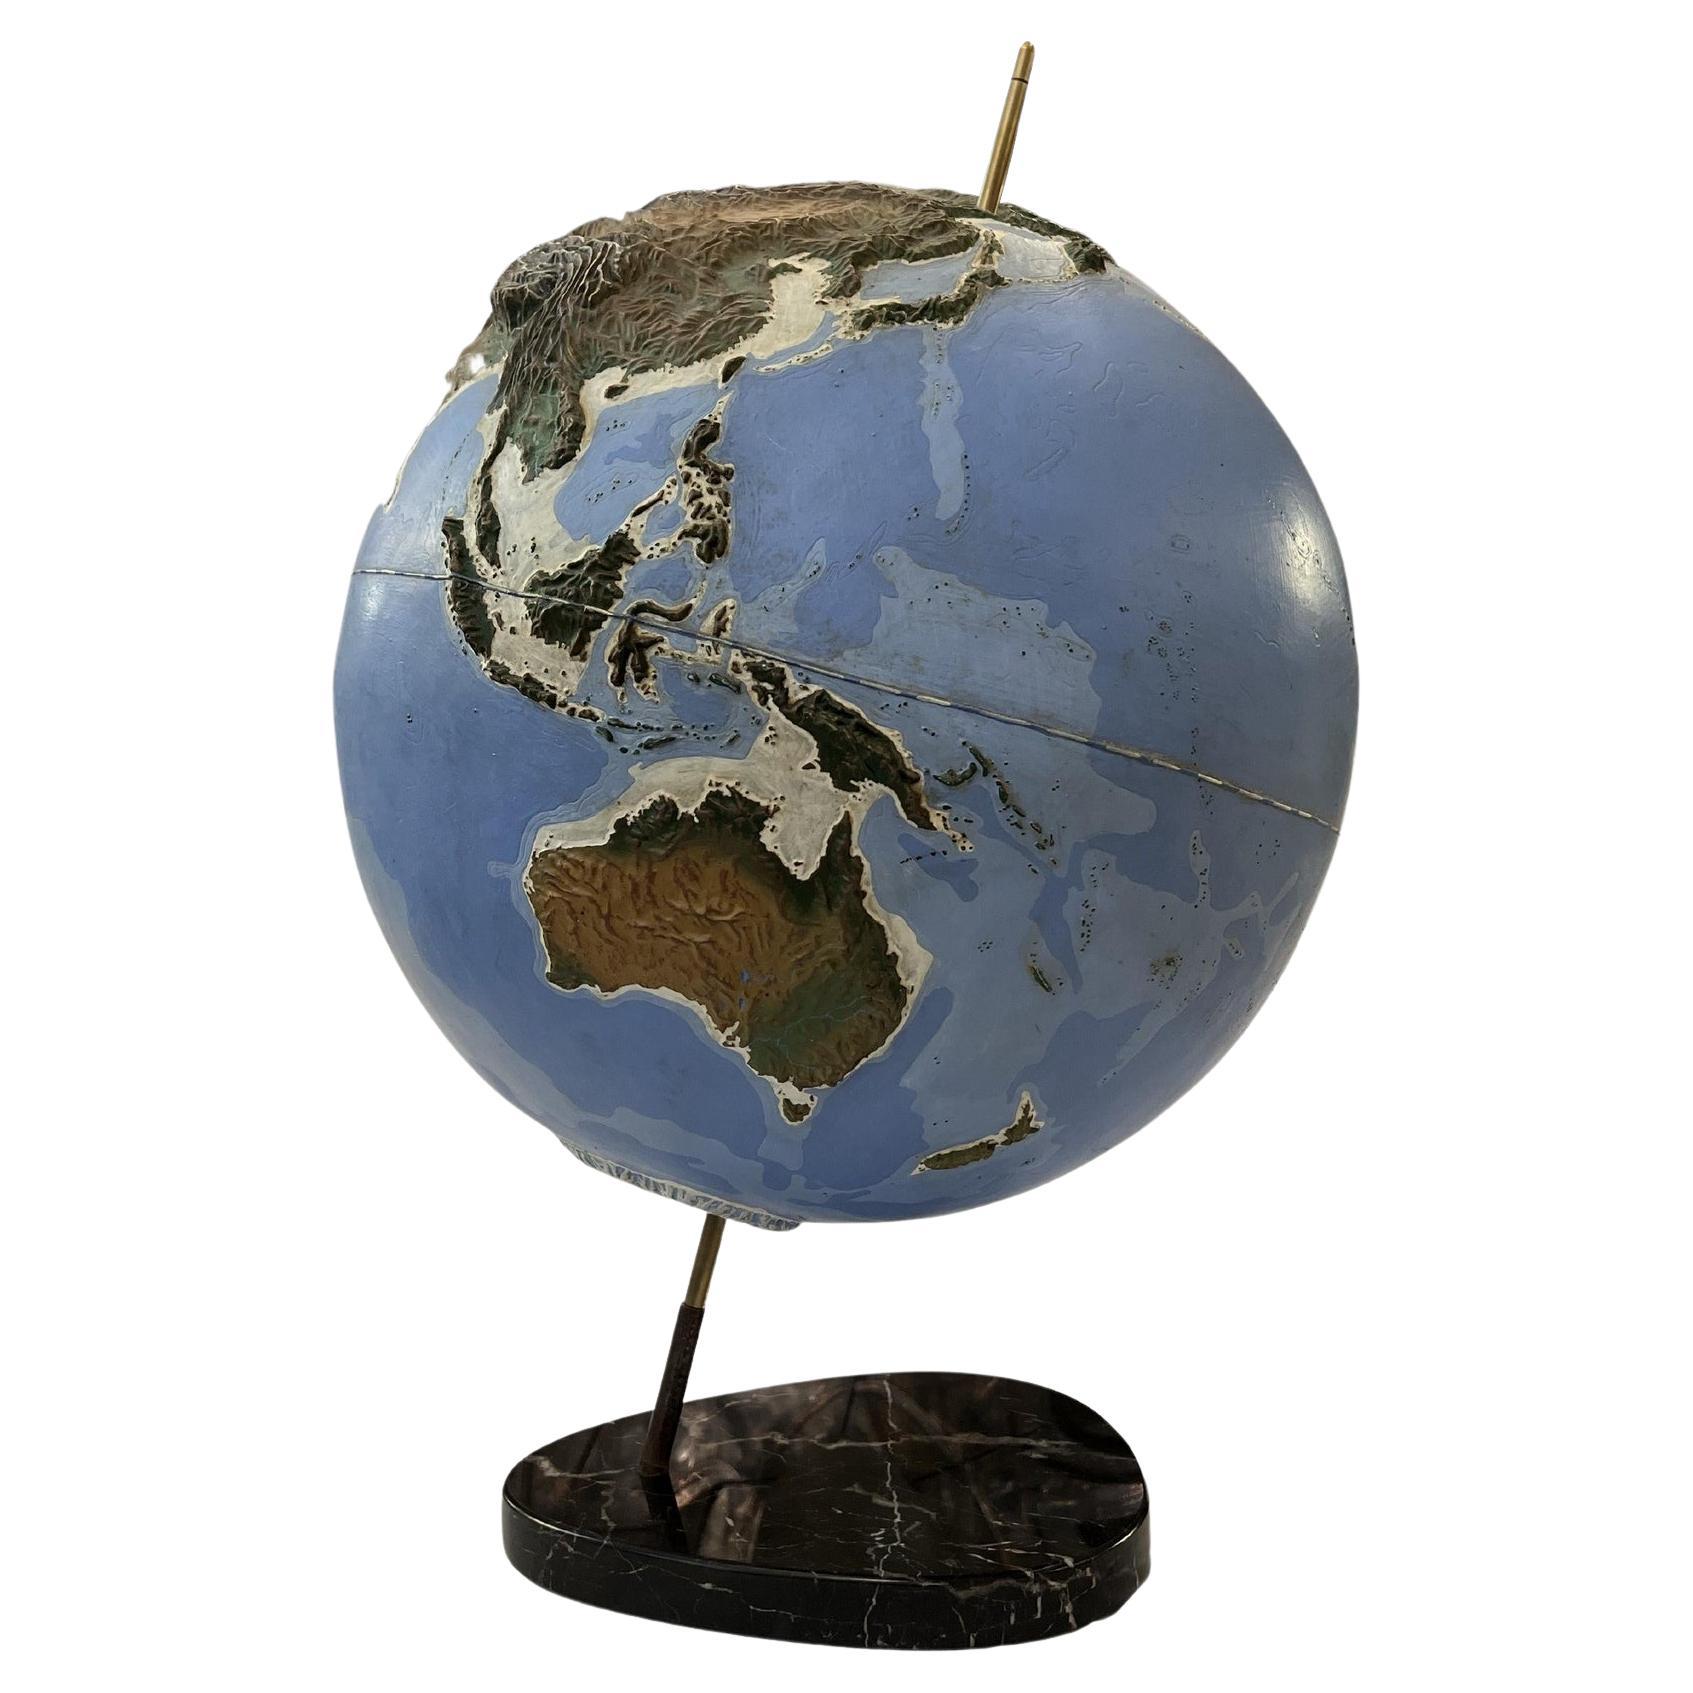 Grand globe terrestre en plexiglas peint, France, datant d'environ 1950